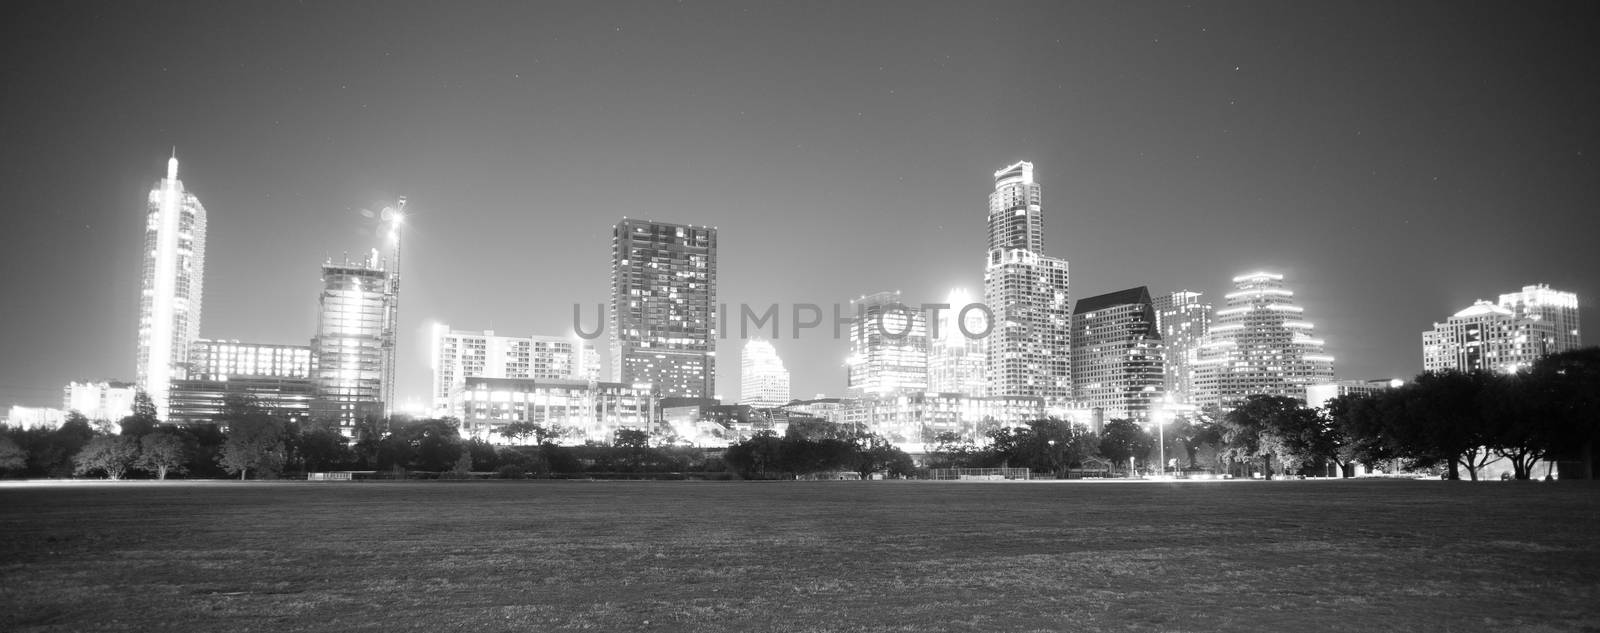 Monochrome Downtown Austin Texas Skyline View Zilker Metropolita by ChrisBoswell